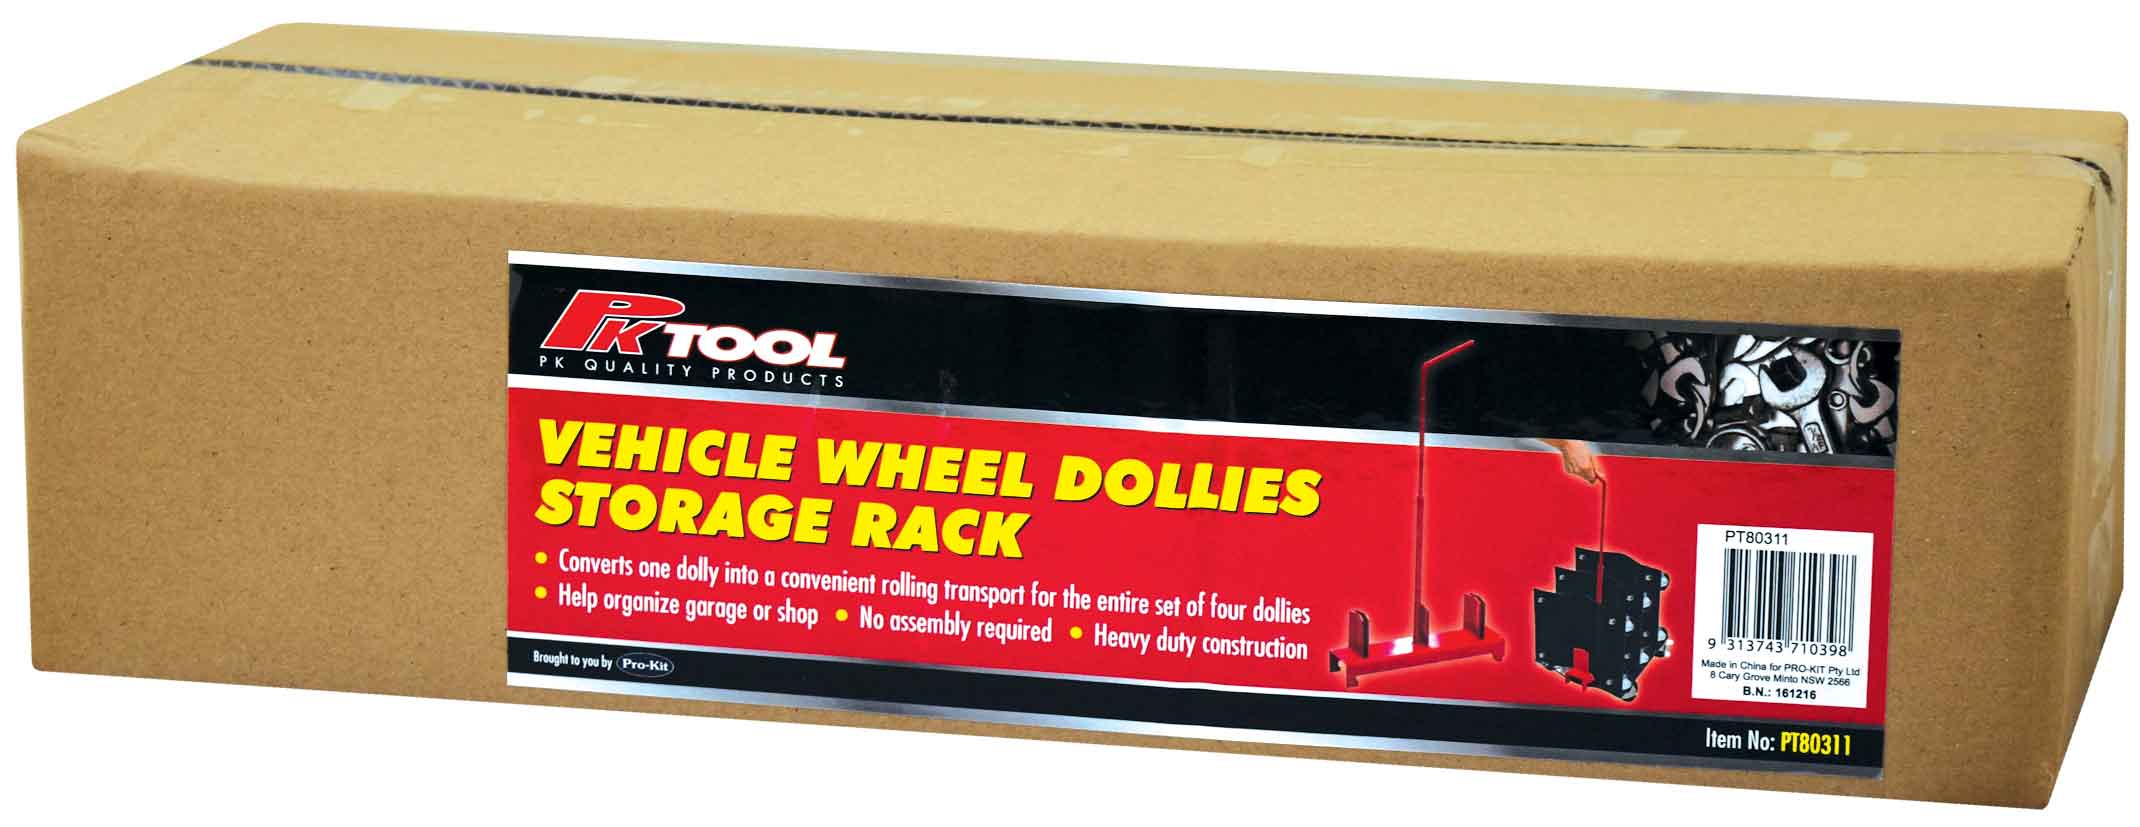 PT80311 Vehicle Wheel Dollies Strorage/Transport Rack image 4